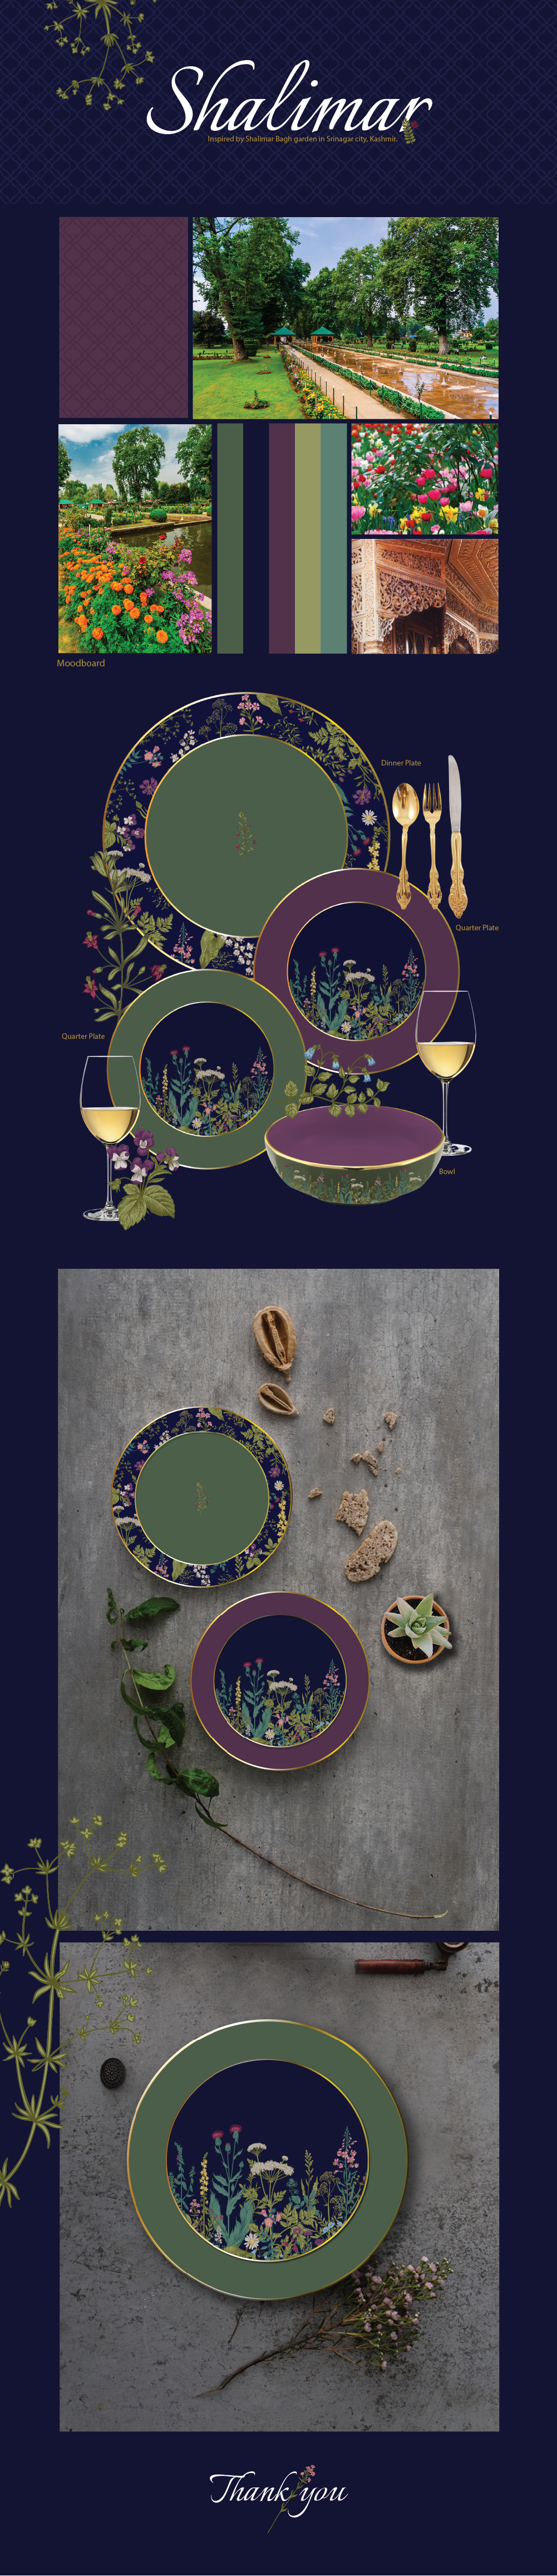 surfacedesign graphic India Kashmir Shalimar Flowers mumbaidesigner plates crockery colours